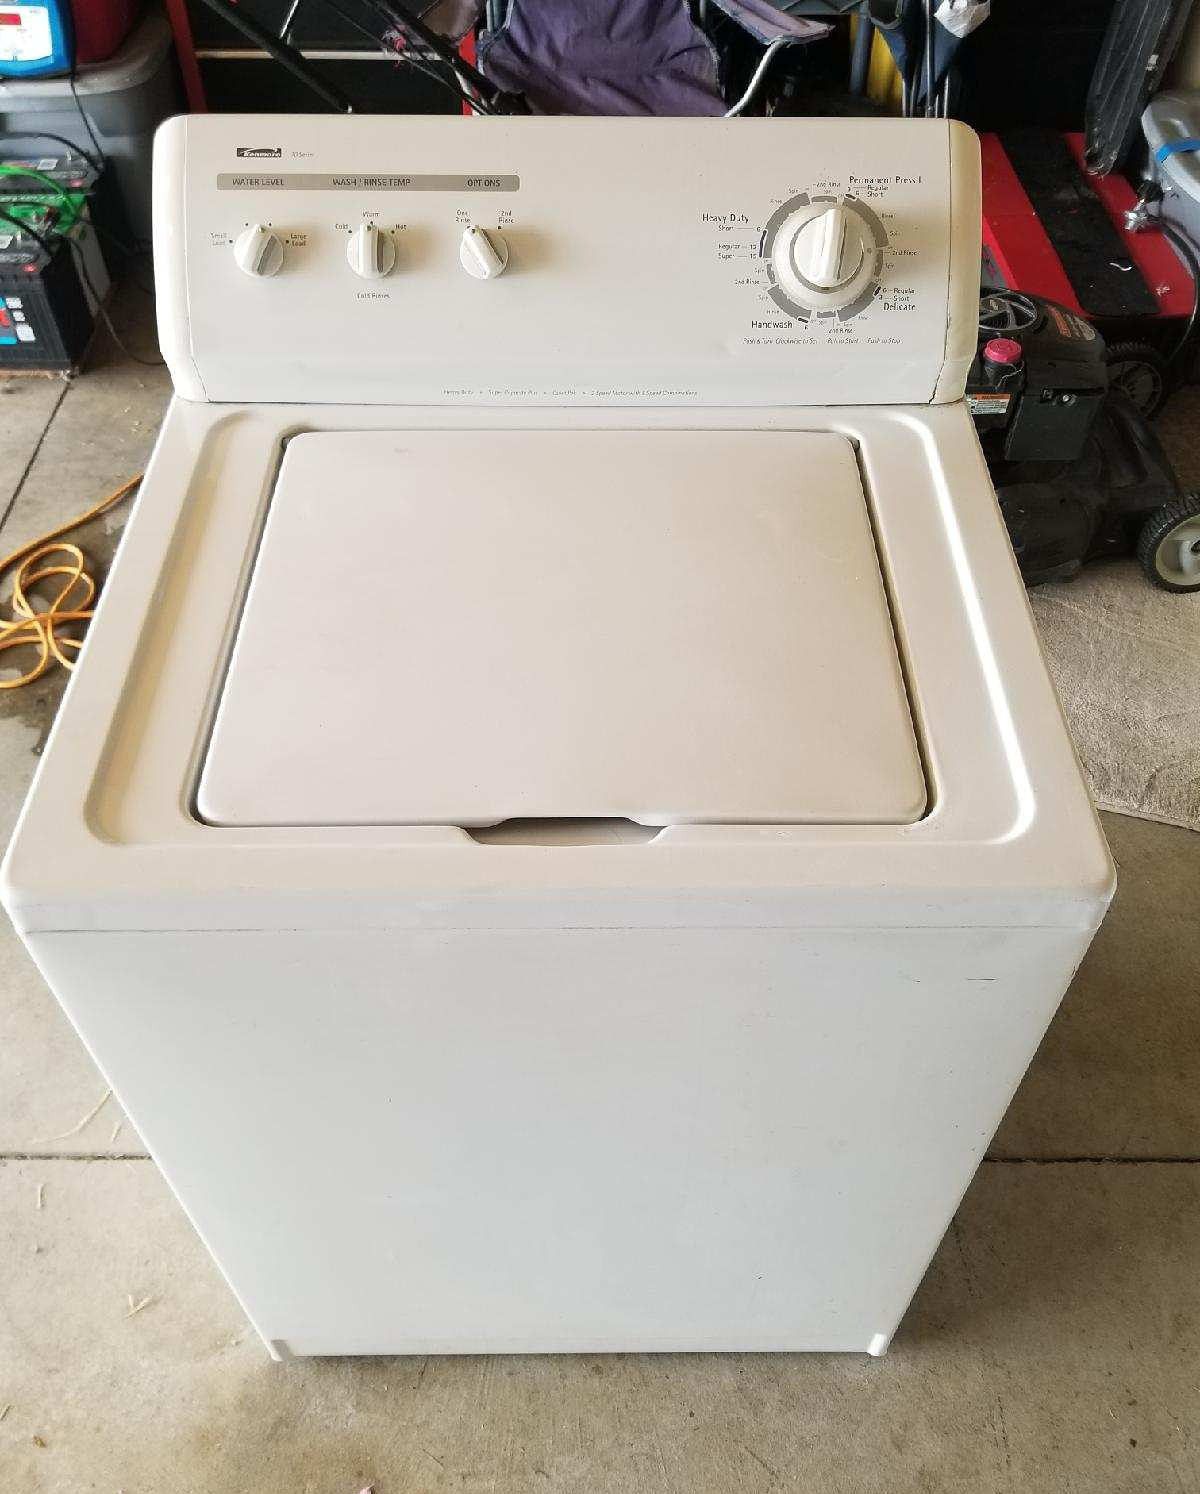 Kenmore 70 Series washer